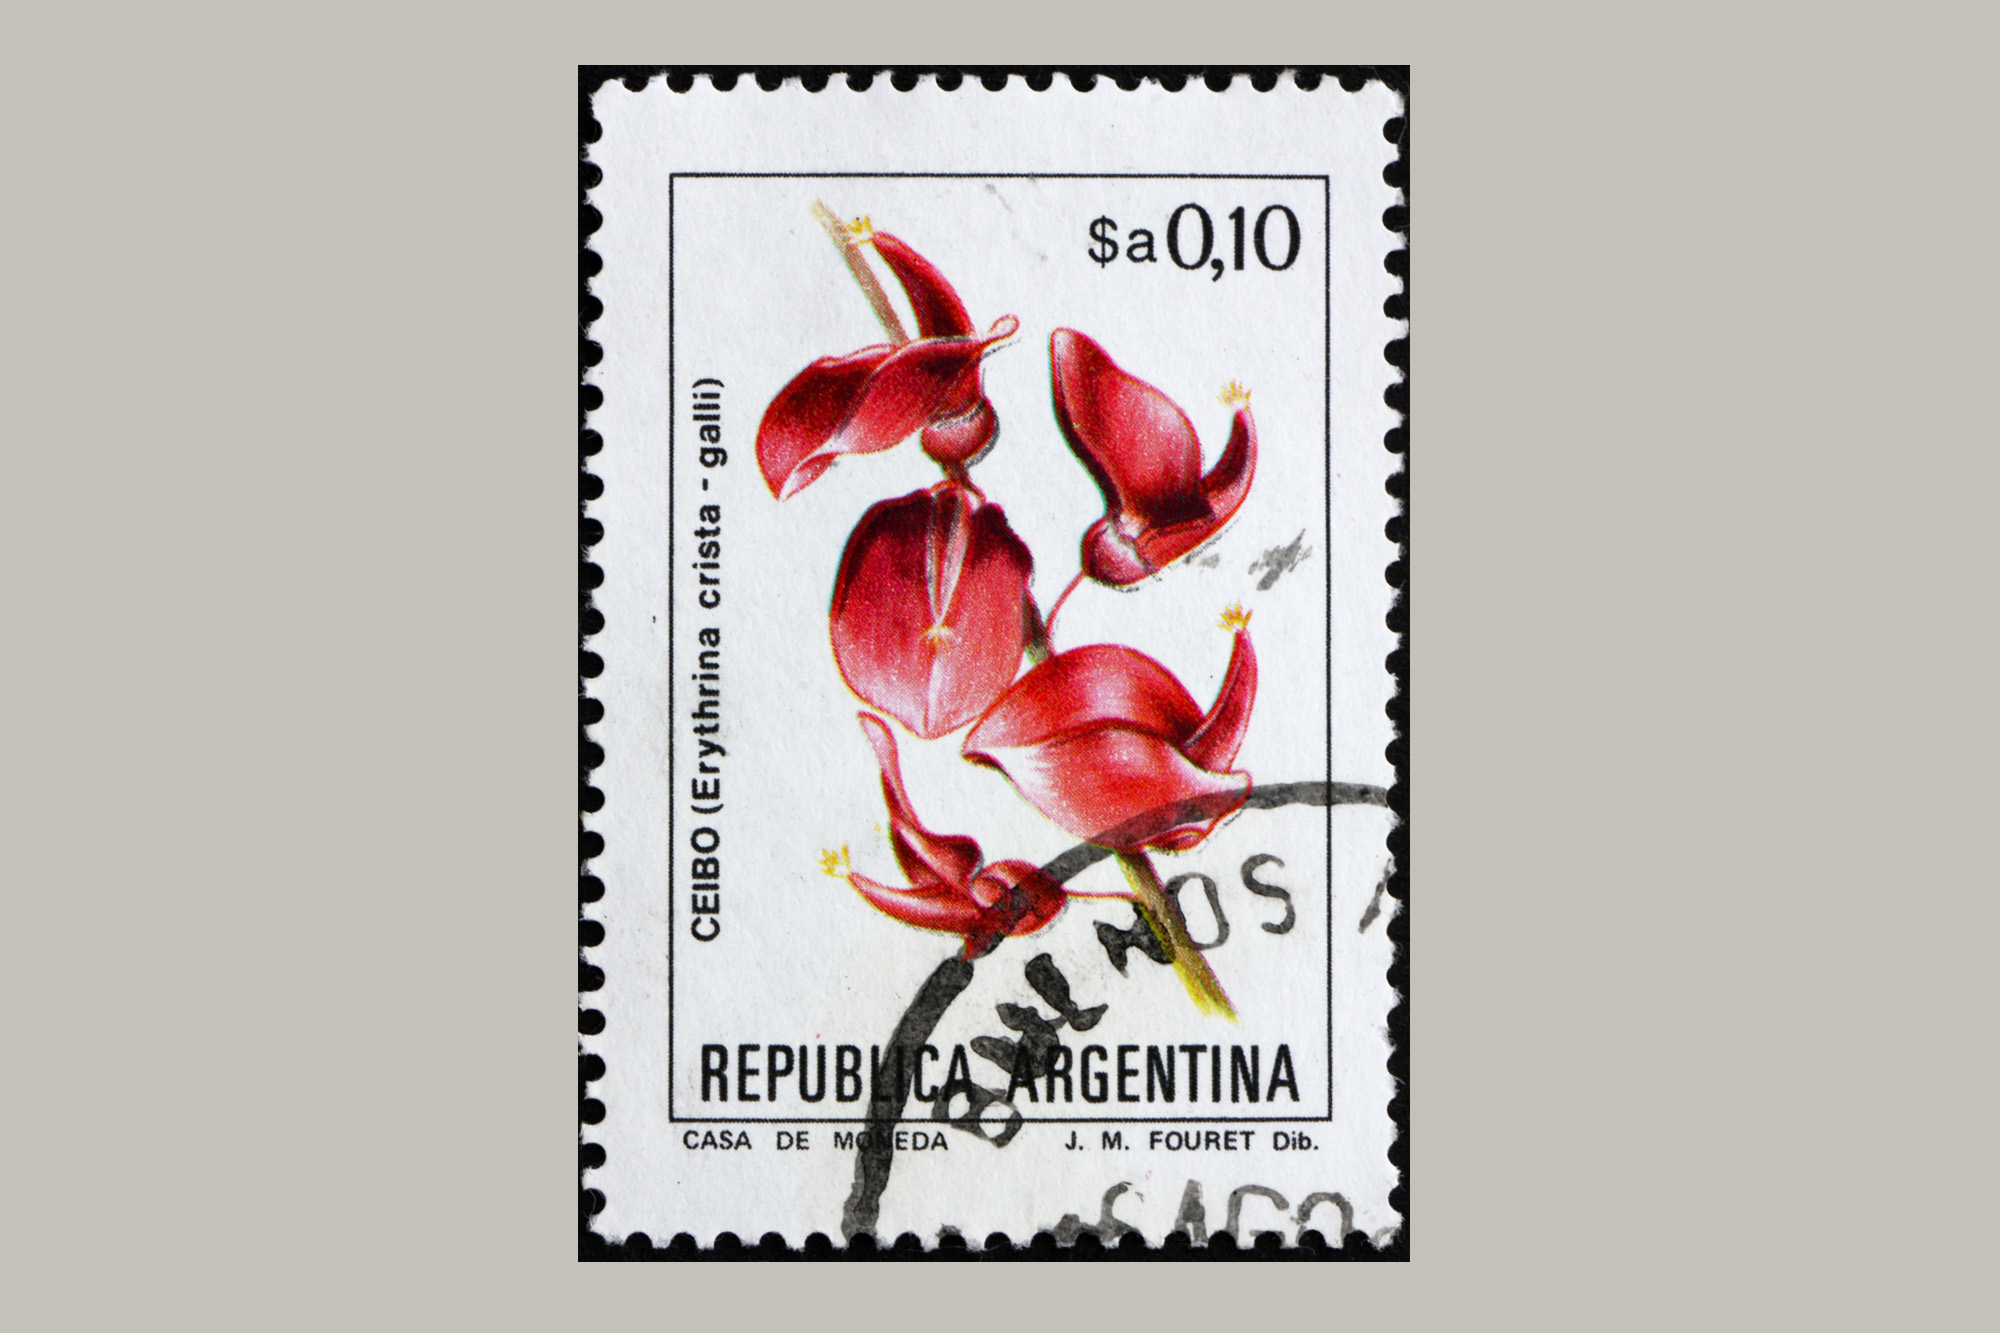 La flor nacional de Argentina | Espores